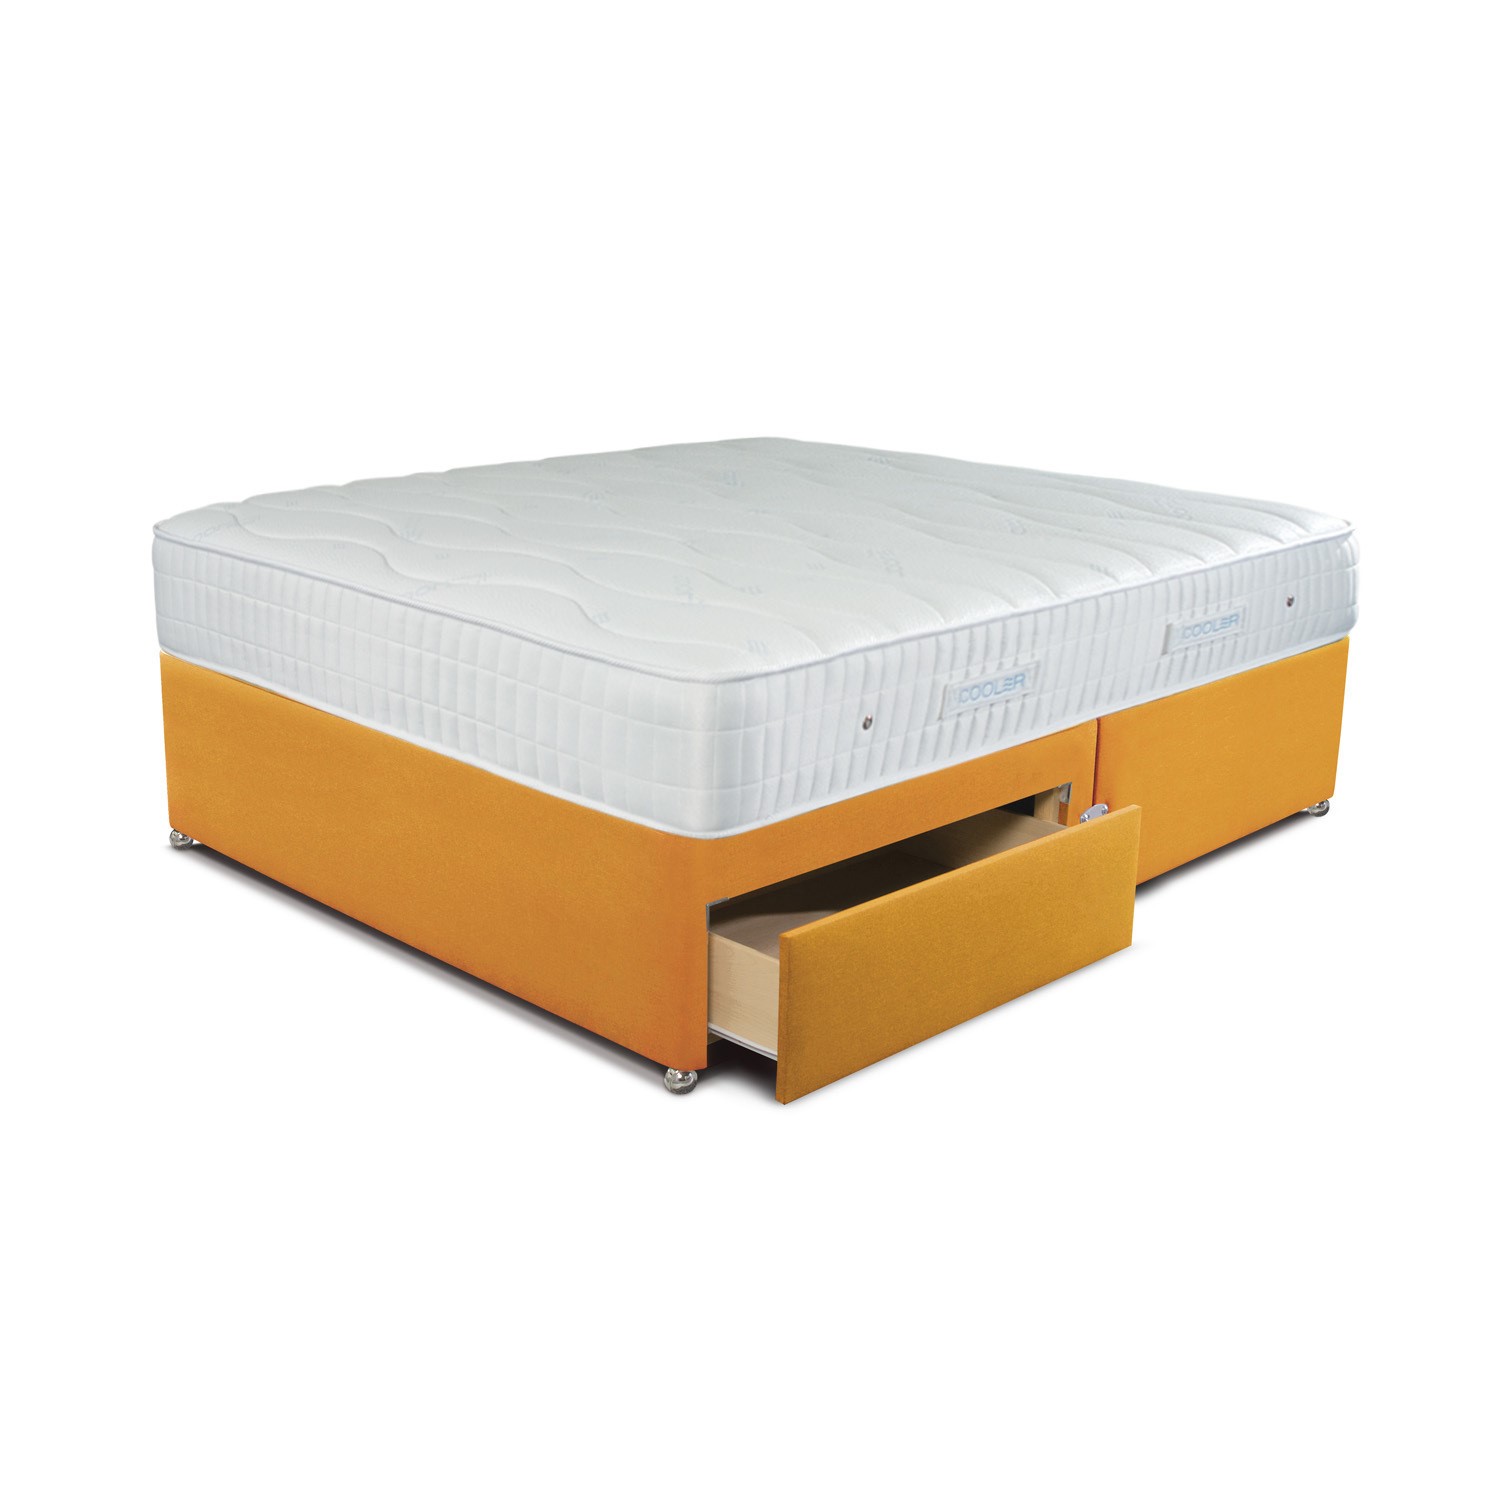 Photo of Sleepeezee double 2 drawer divan bed in tweed mustard with cooler pinnacle 1000 mattress